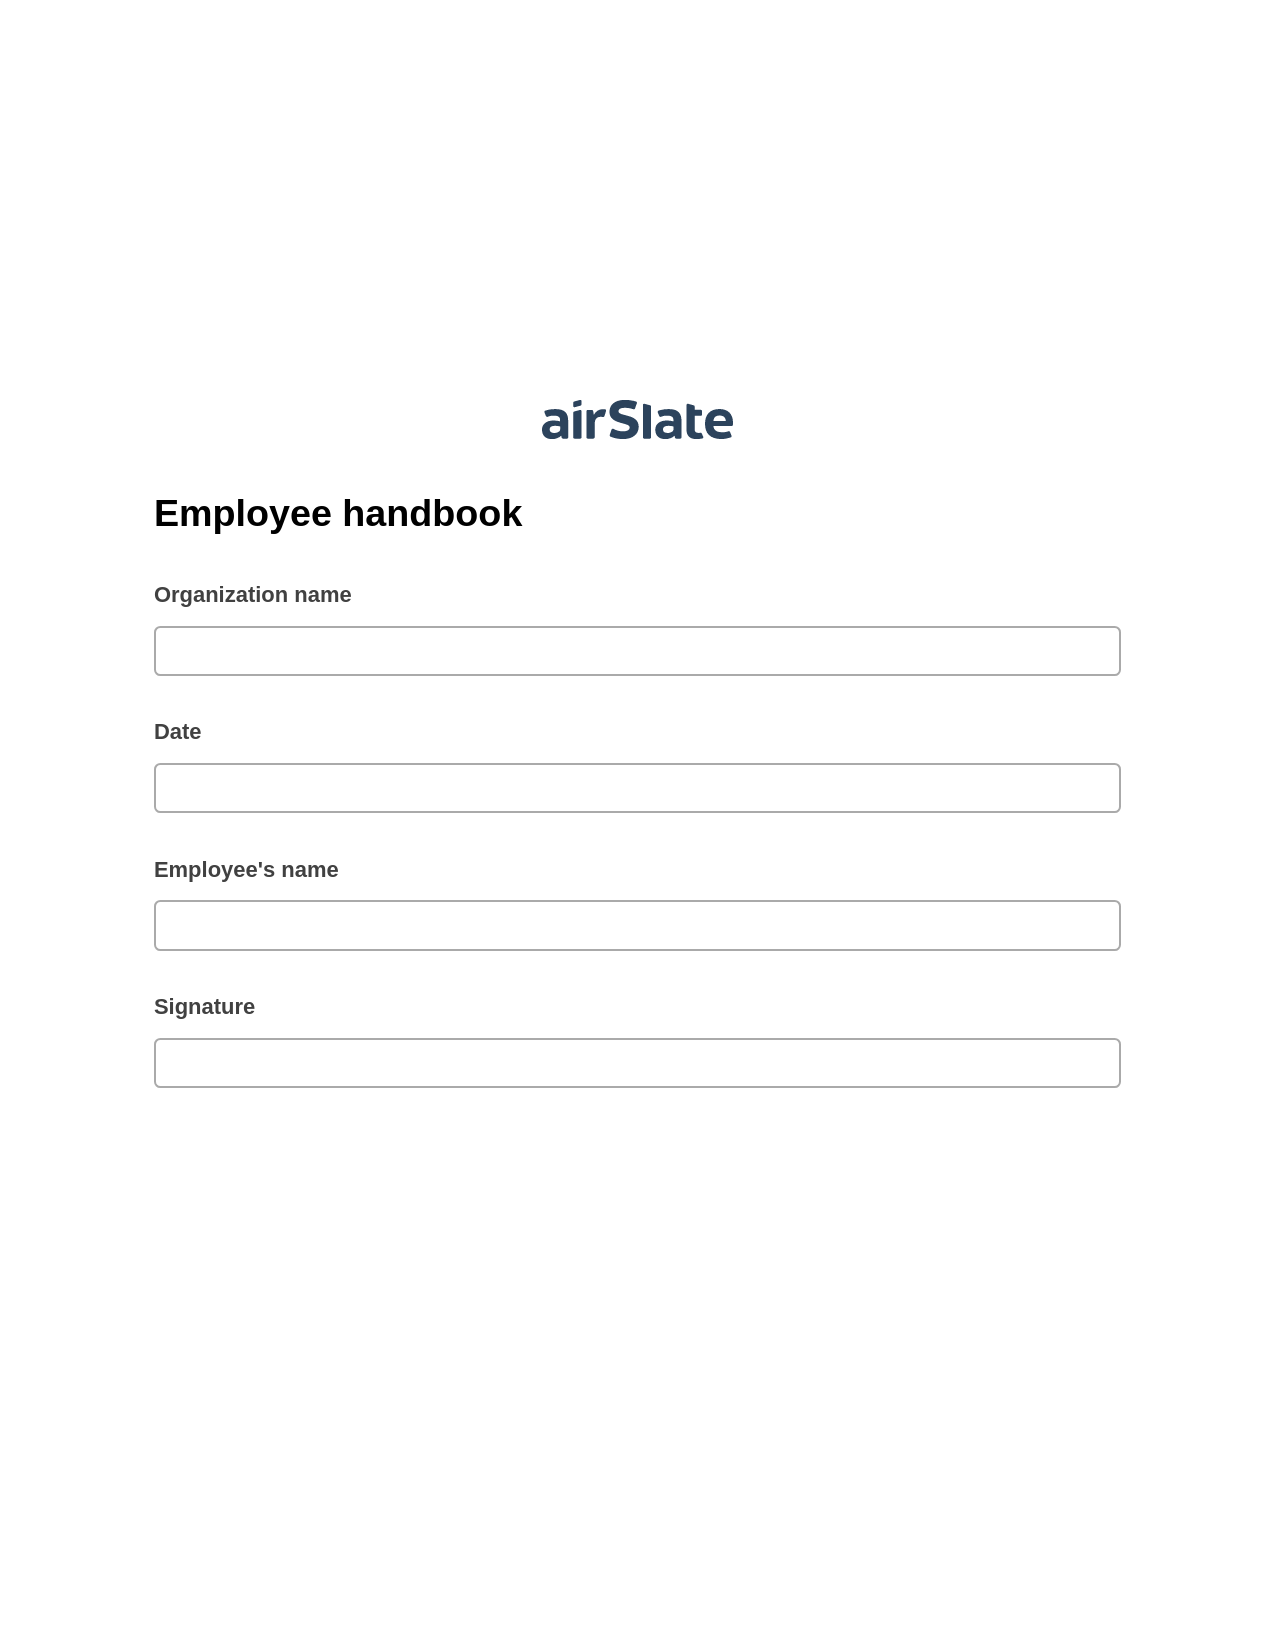 Employee handbook Pre-fill Document Bot, Set Signature Type Bot, Export to Salesforce Bot